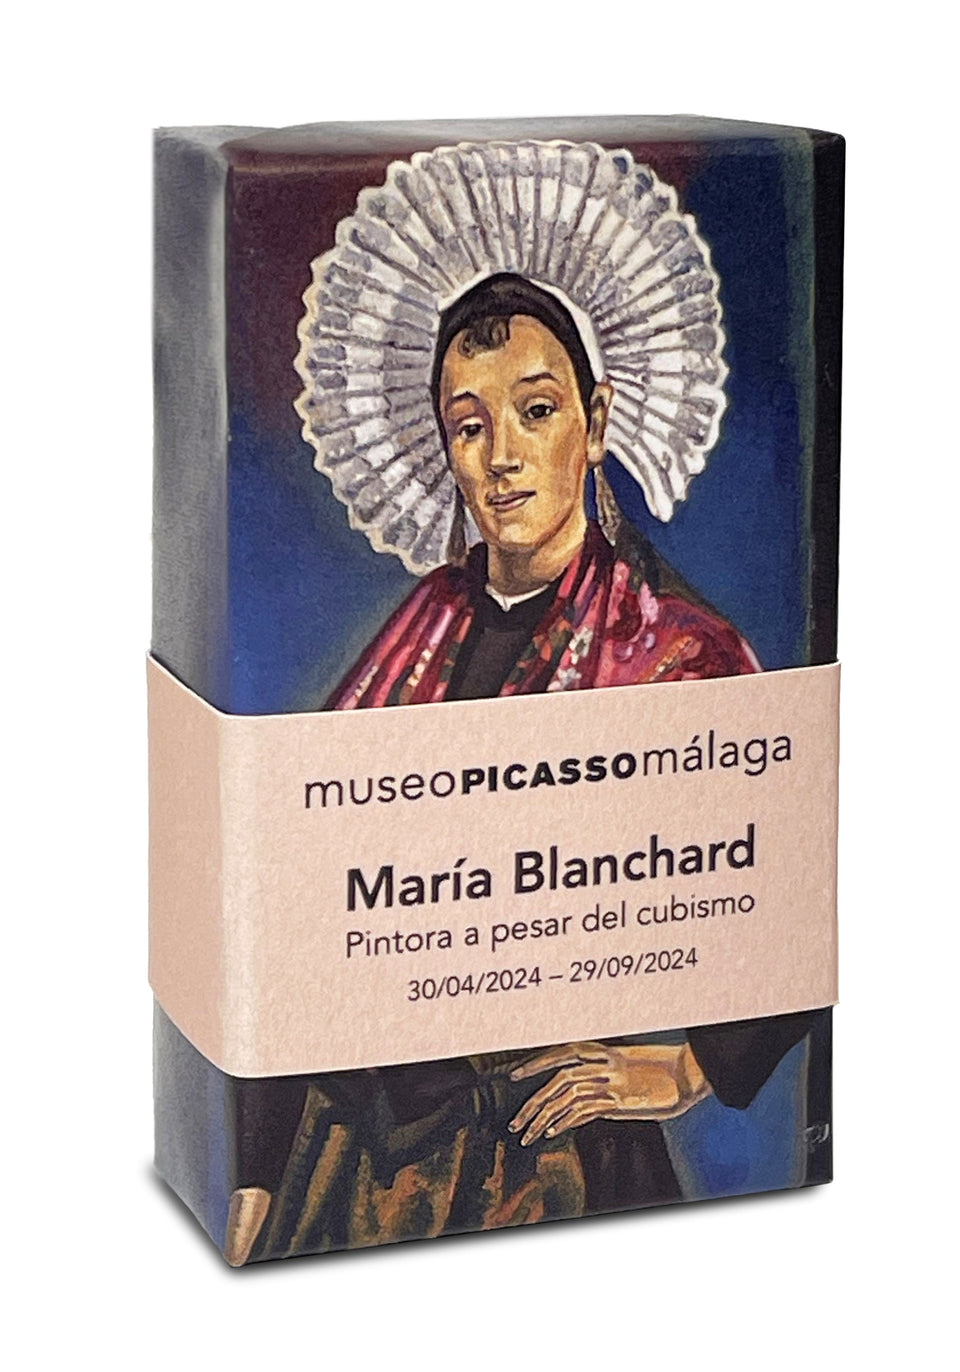 Soap La Boulonnaise by María Blanchard